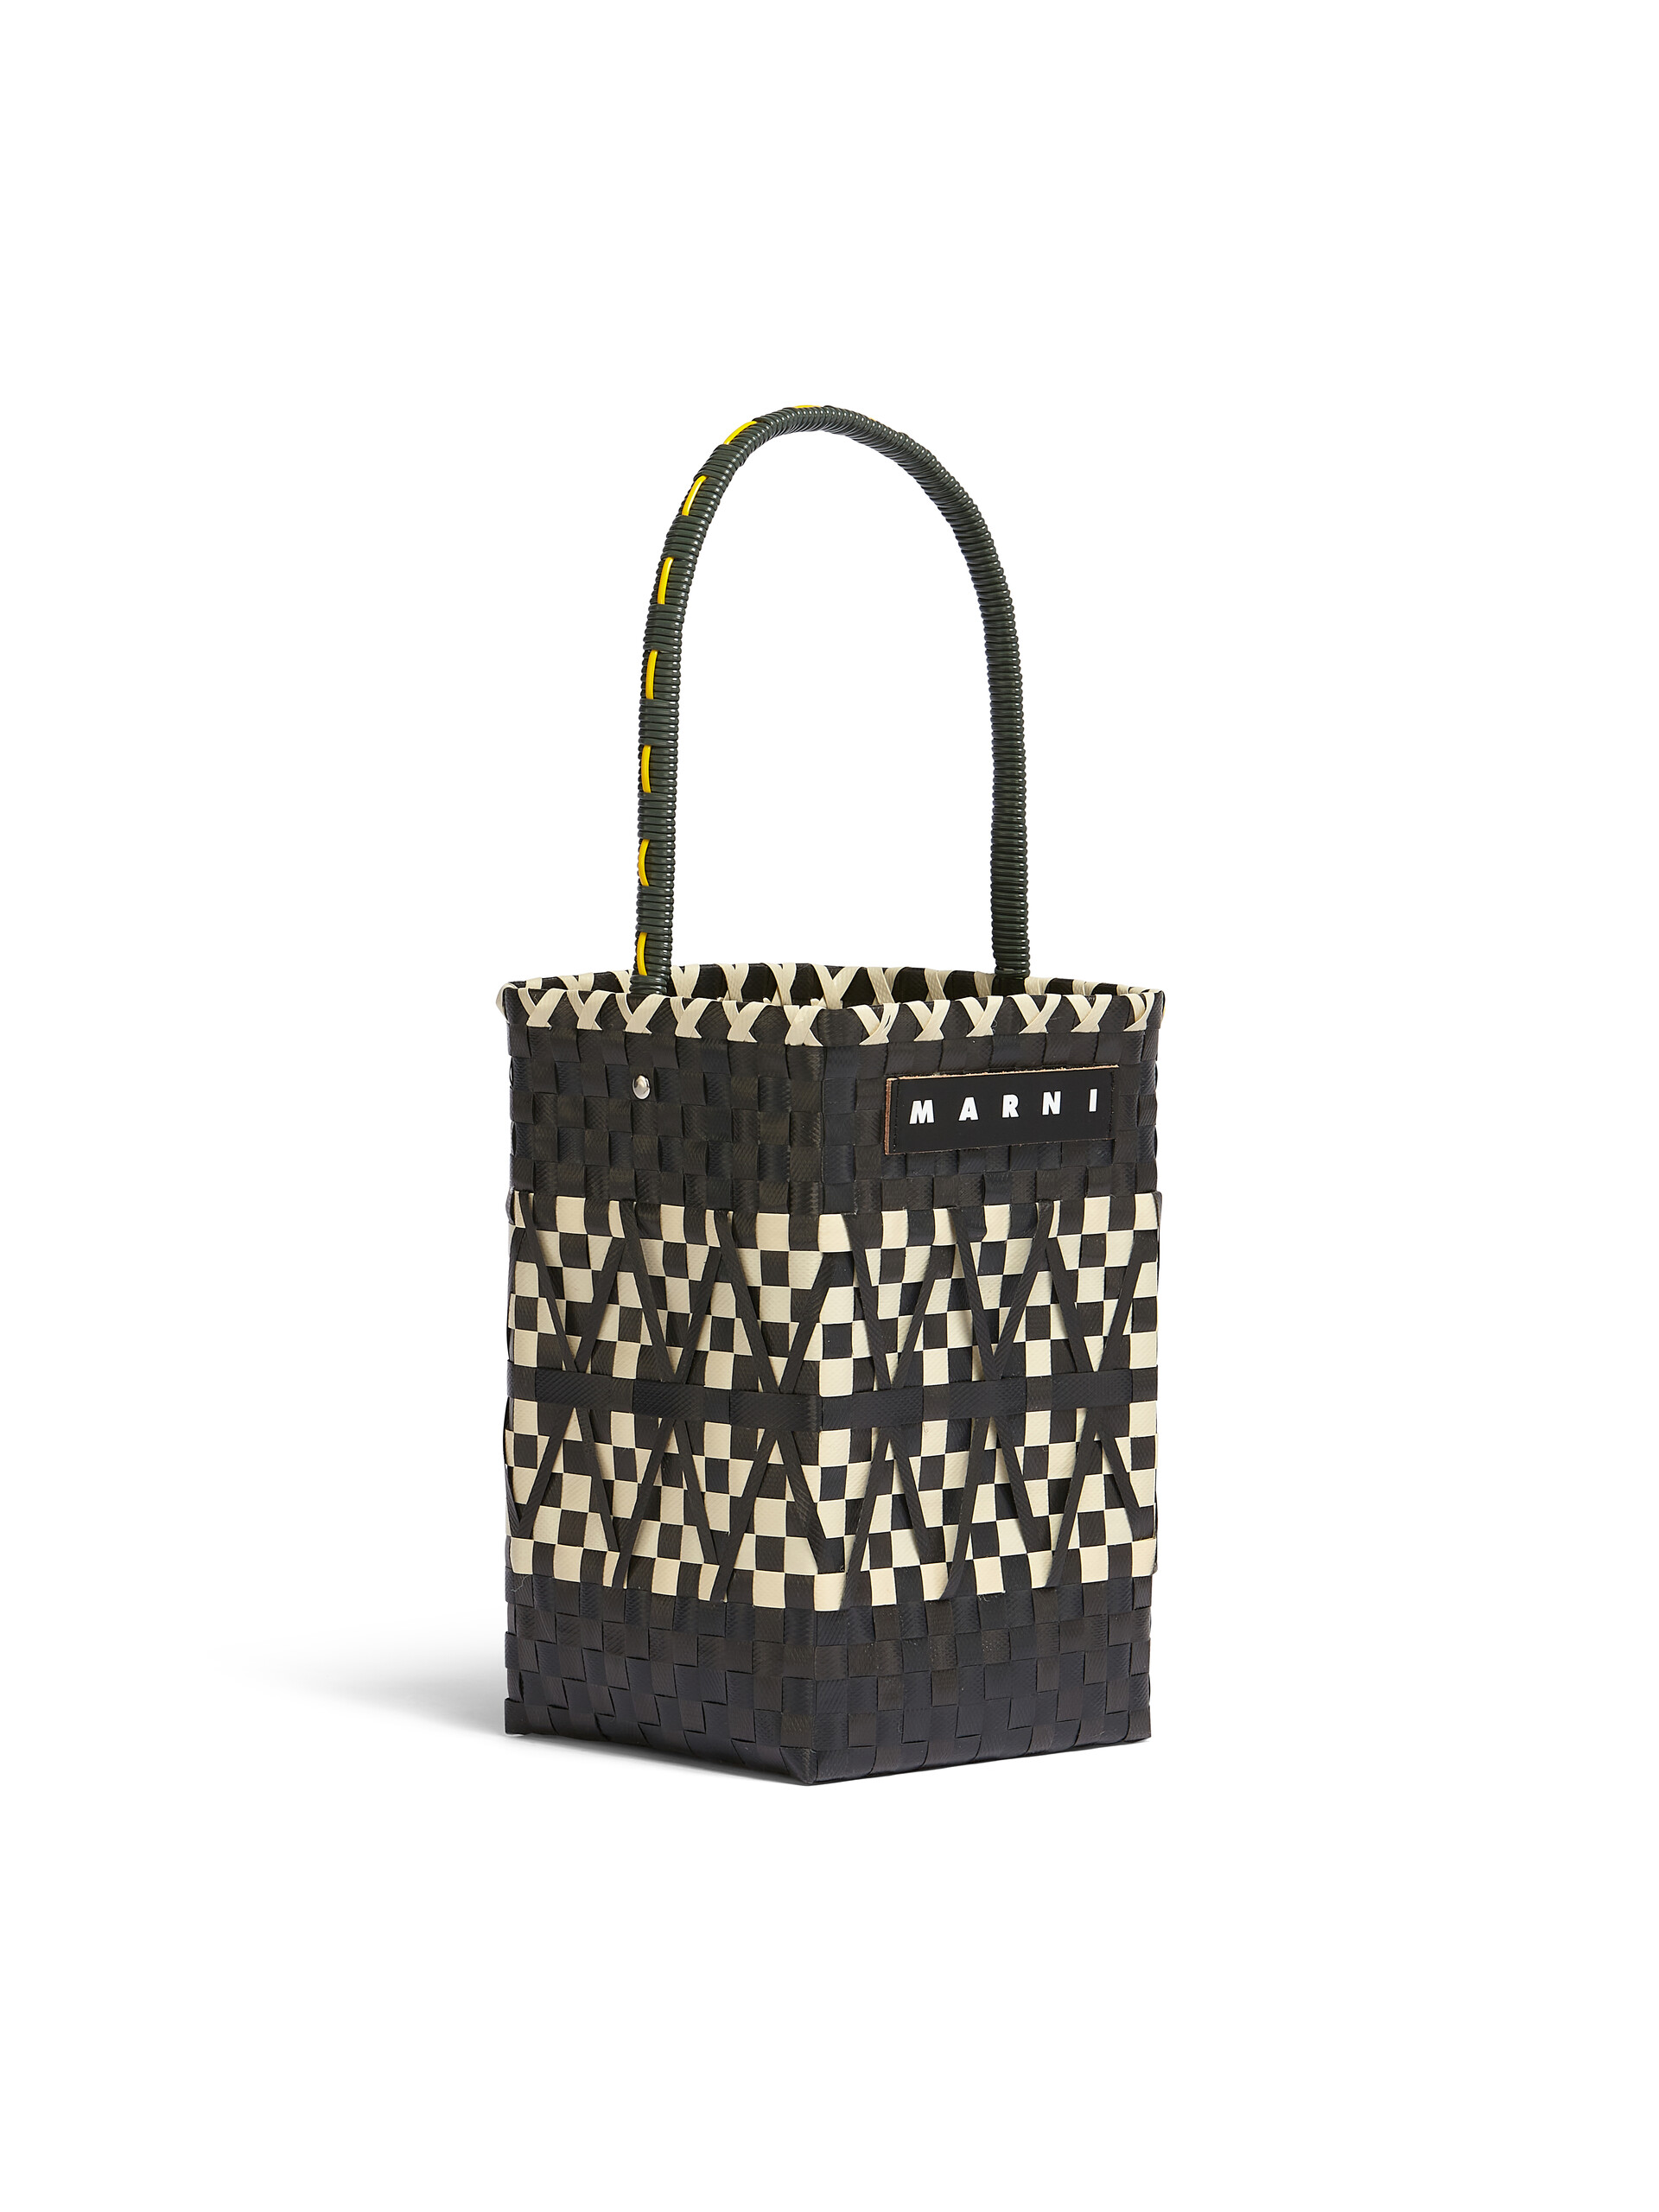 MARNI MARKET STENCIL black and white bucket bag - Shopping Bags - Image 2